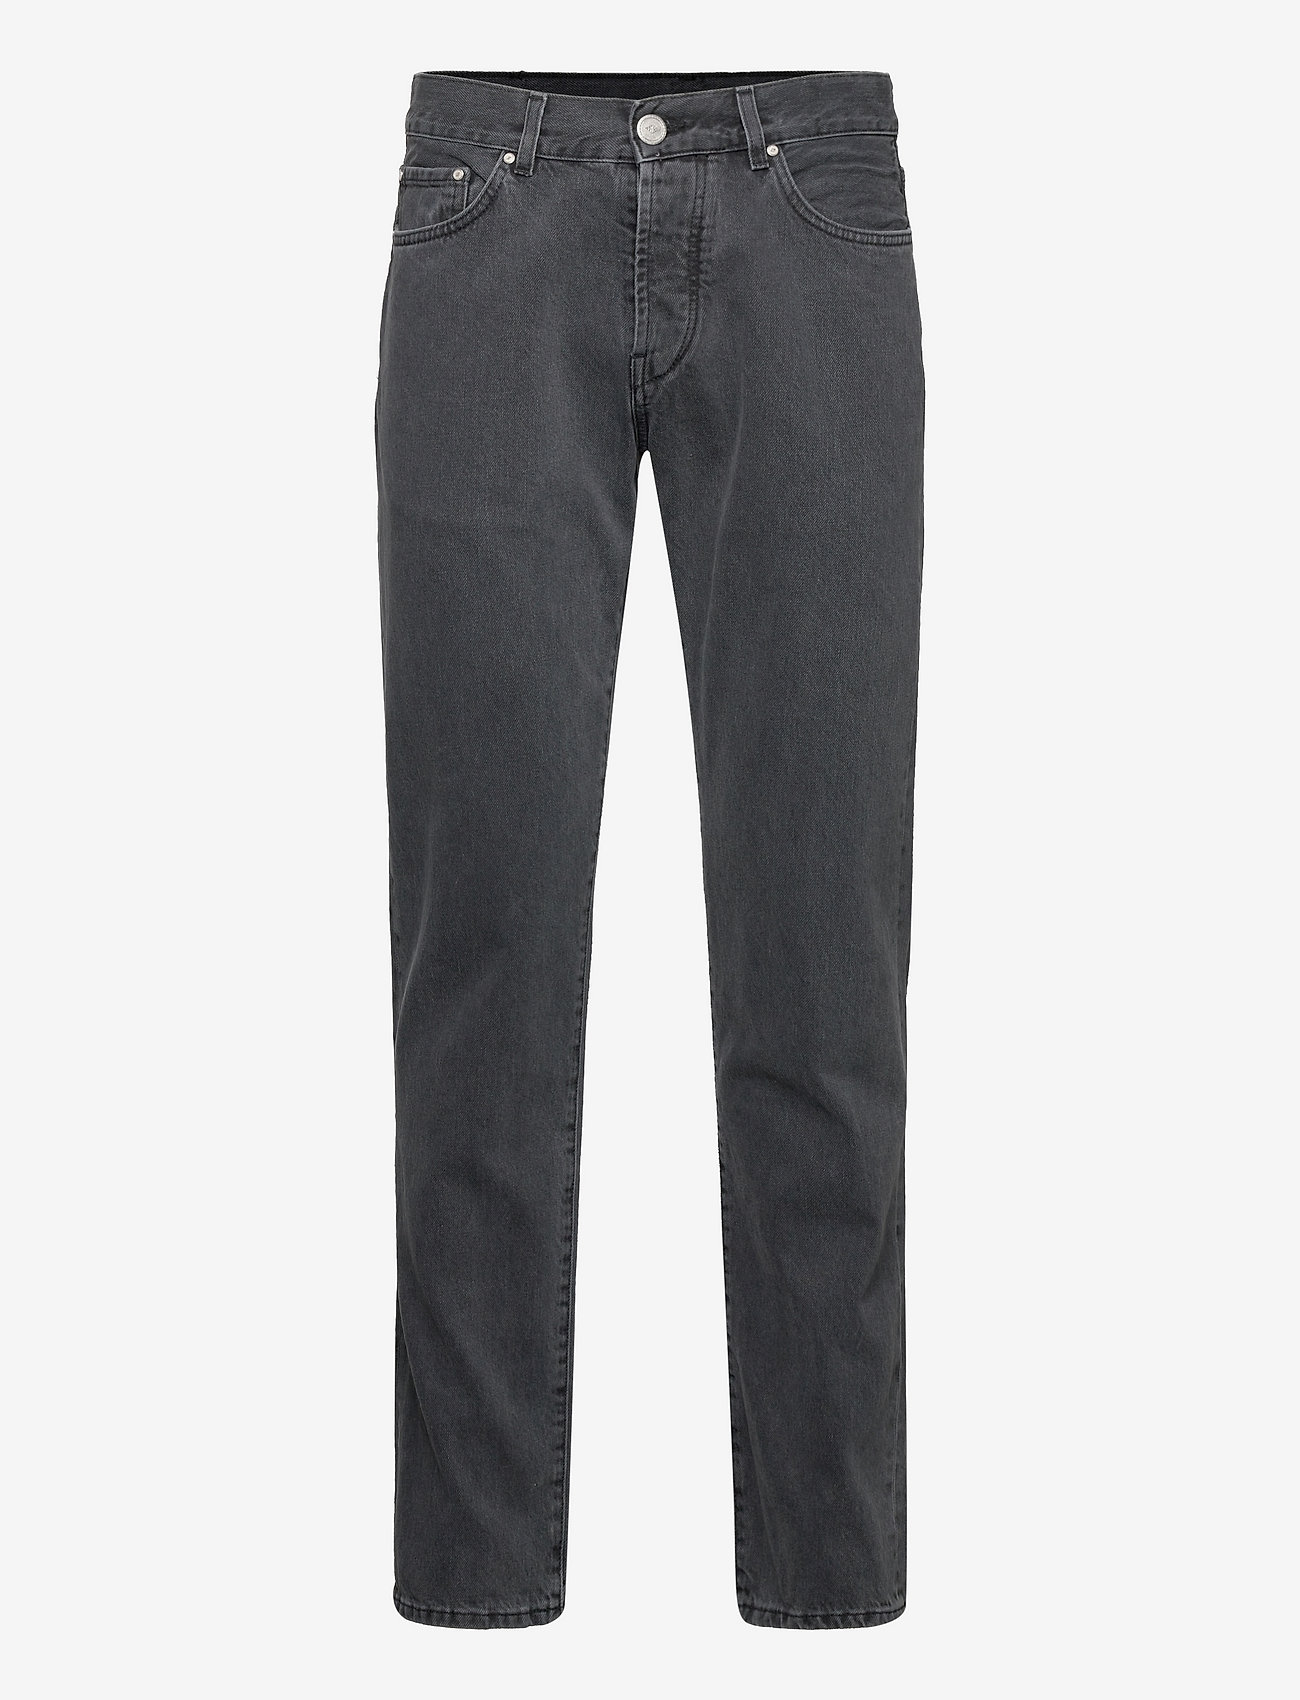 HAN Kjøbenhavn - Tapered Jeans - džinsi - black stone - 0